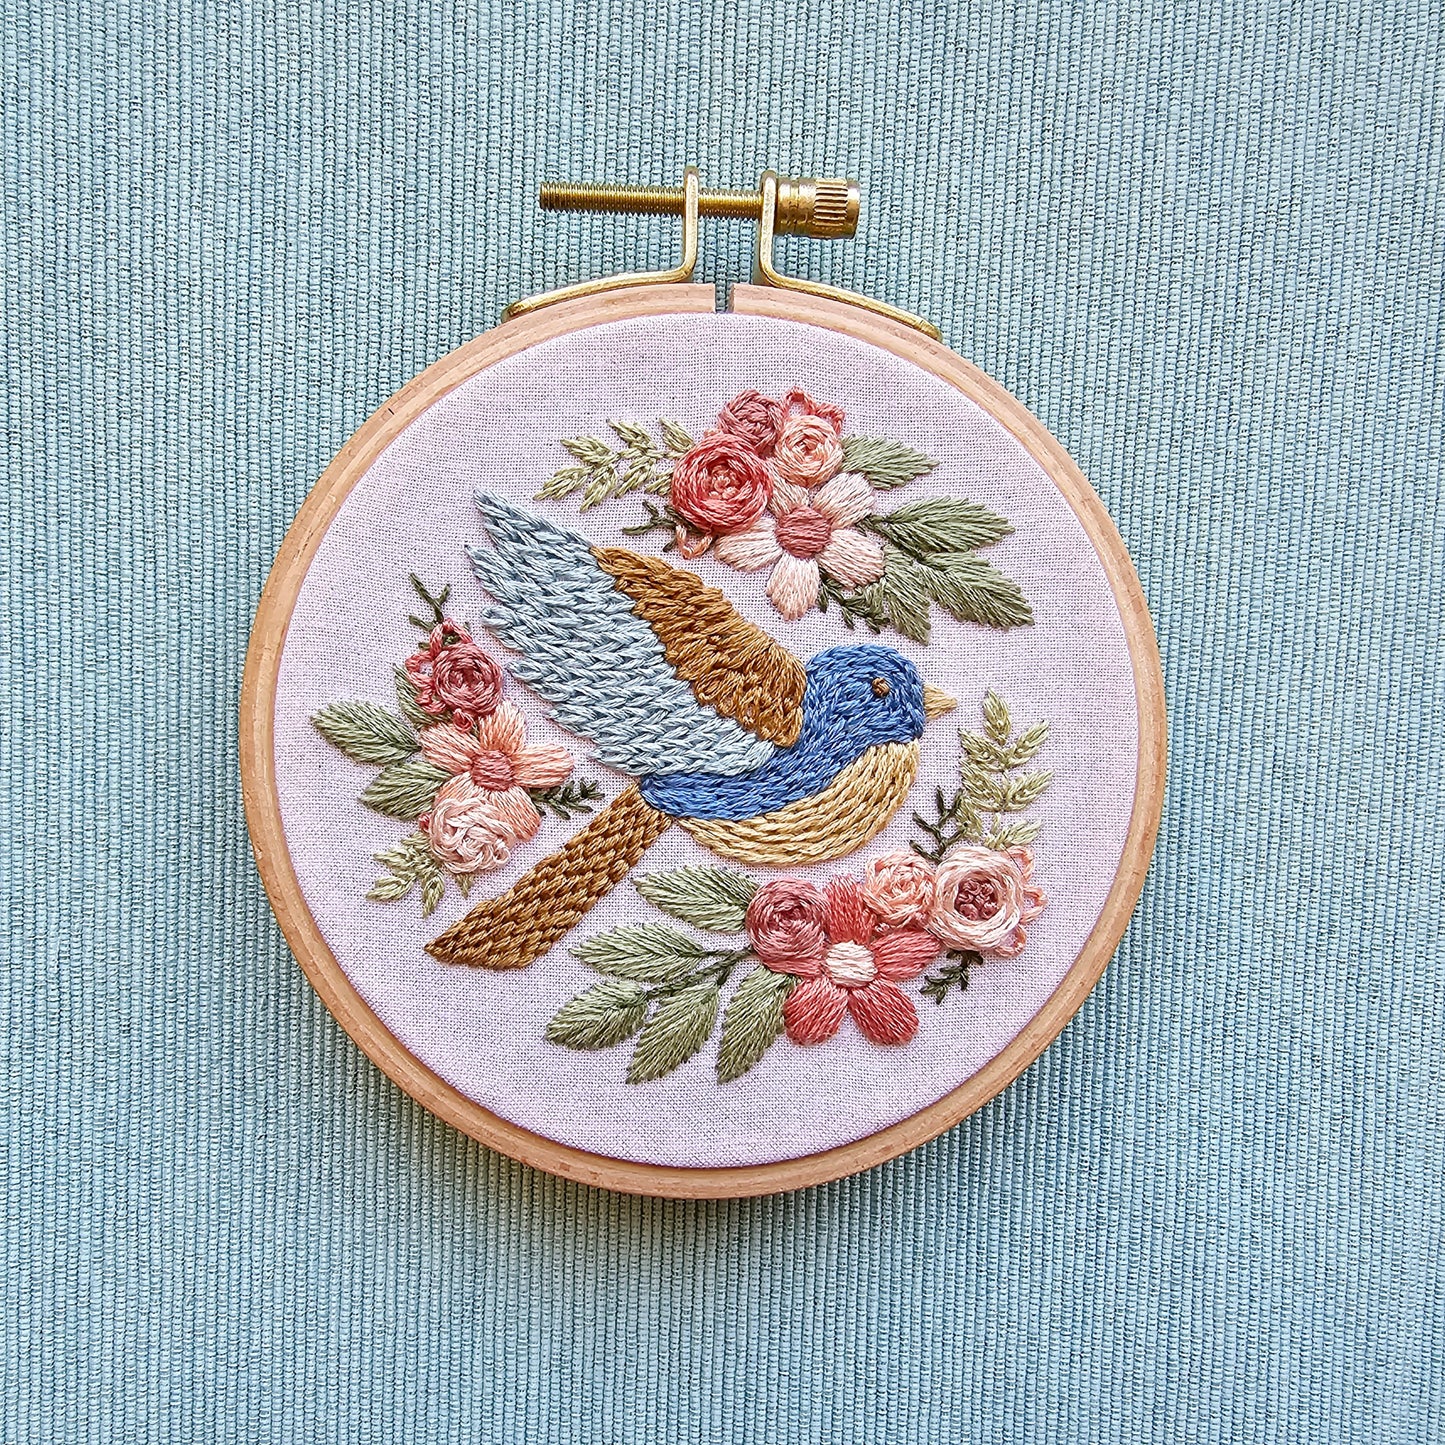 Bluebird Sampler Embroidery Pattern (PDF)